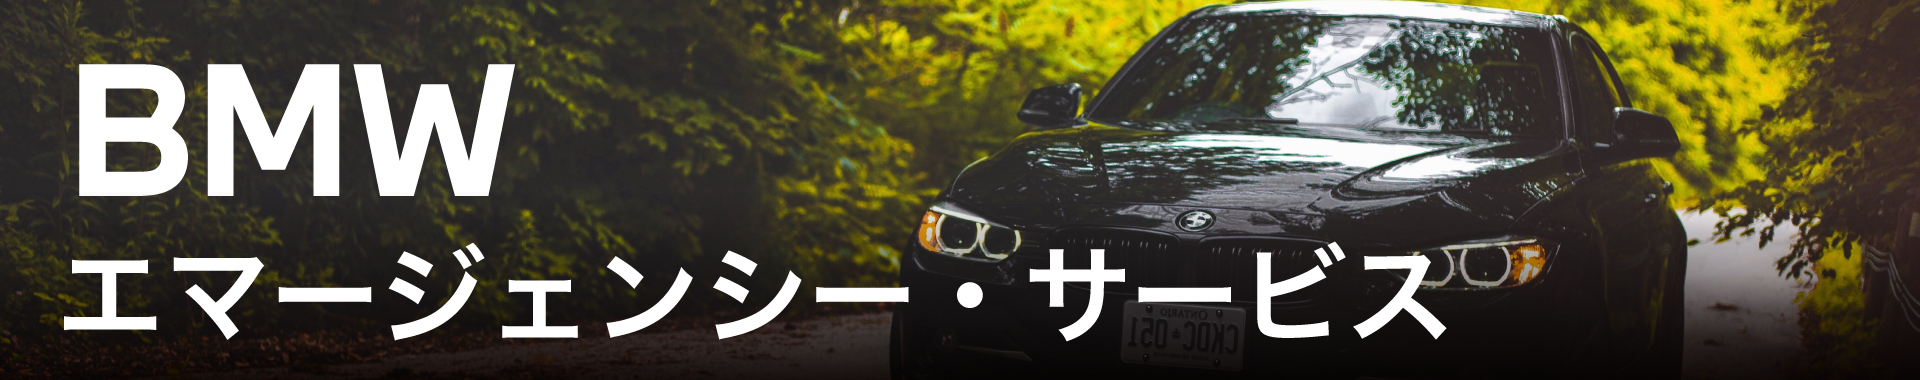 BMWエマージェンシーサービス